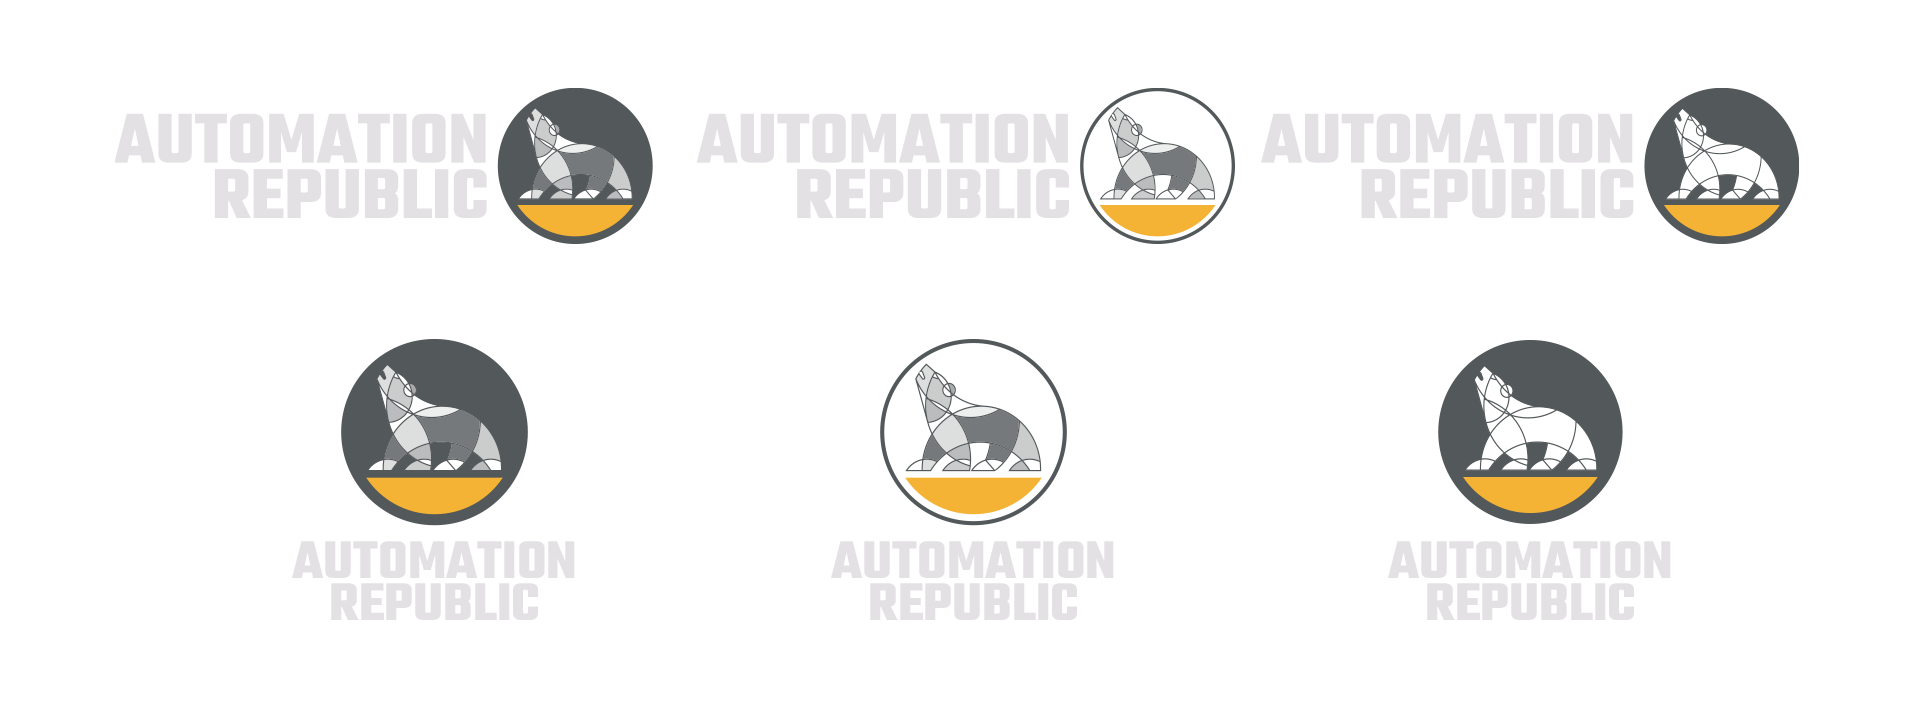 Automation Republic